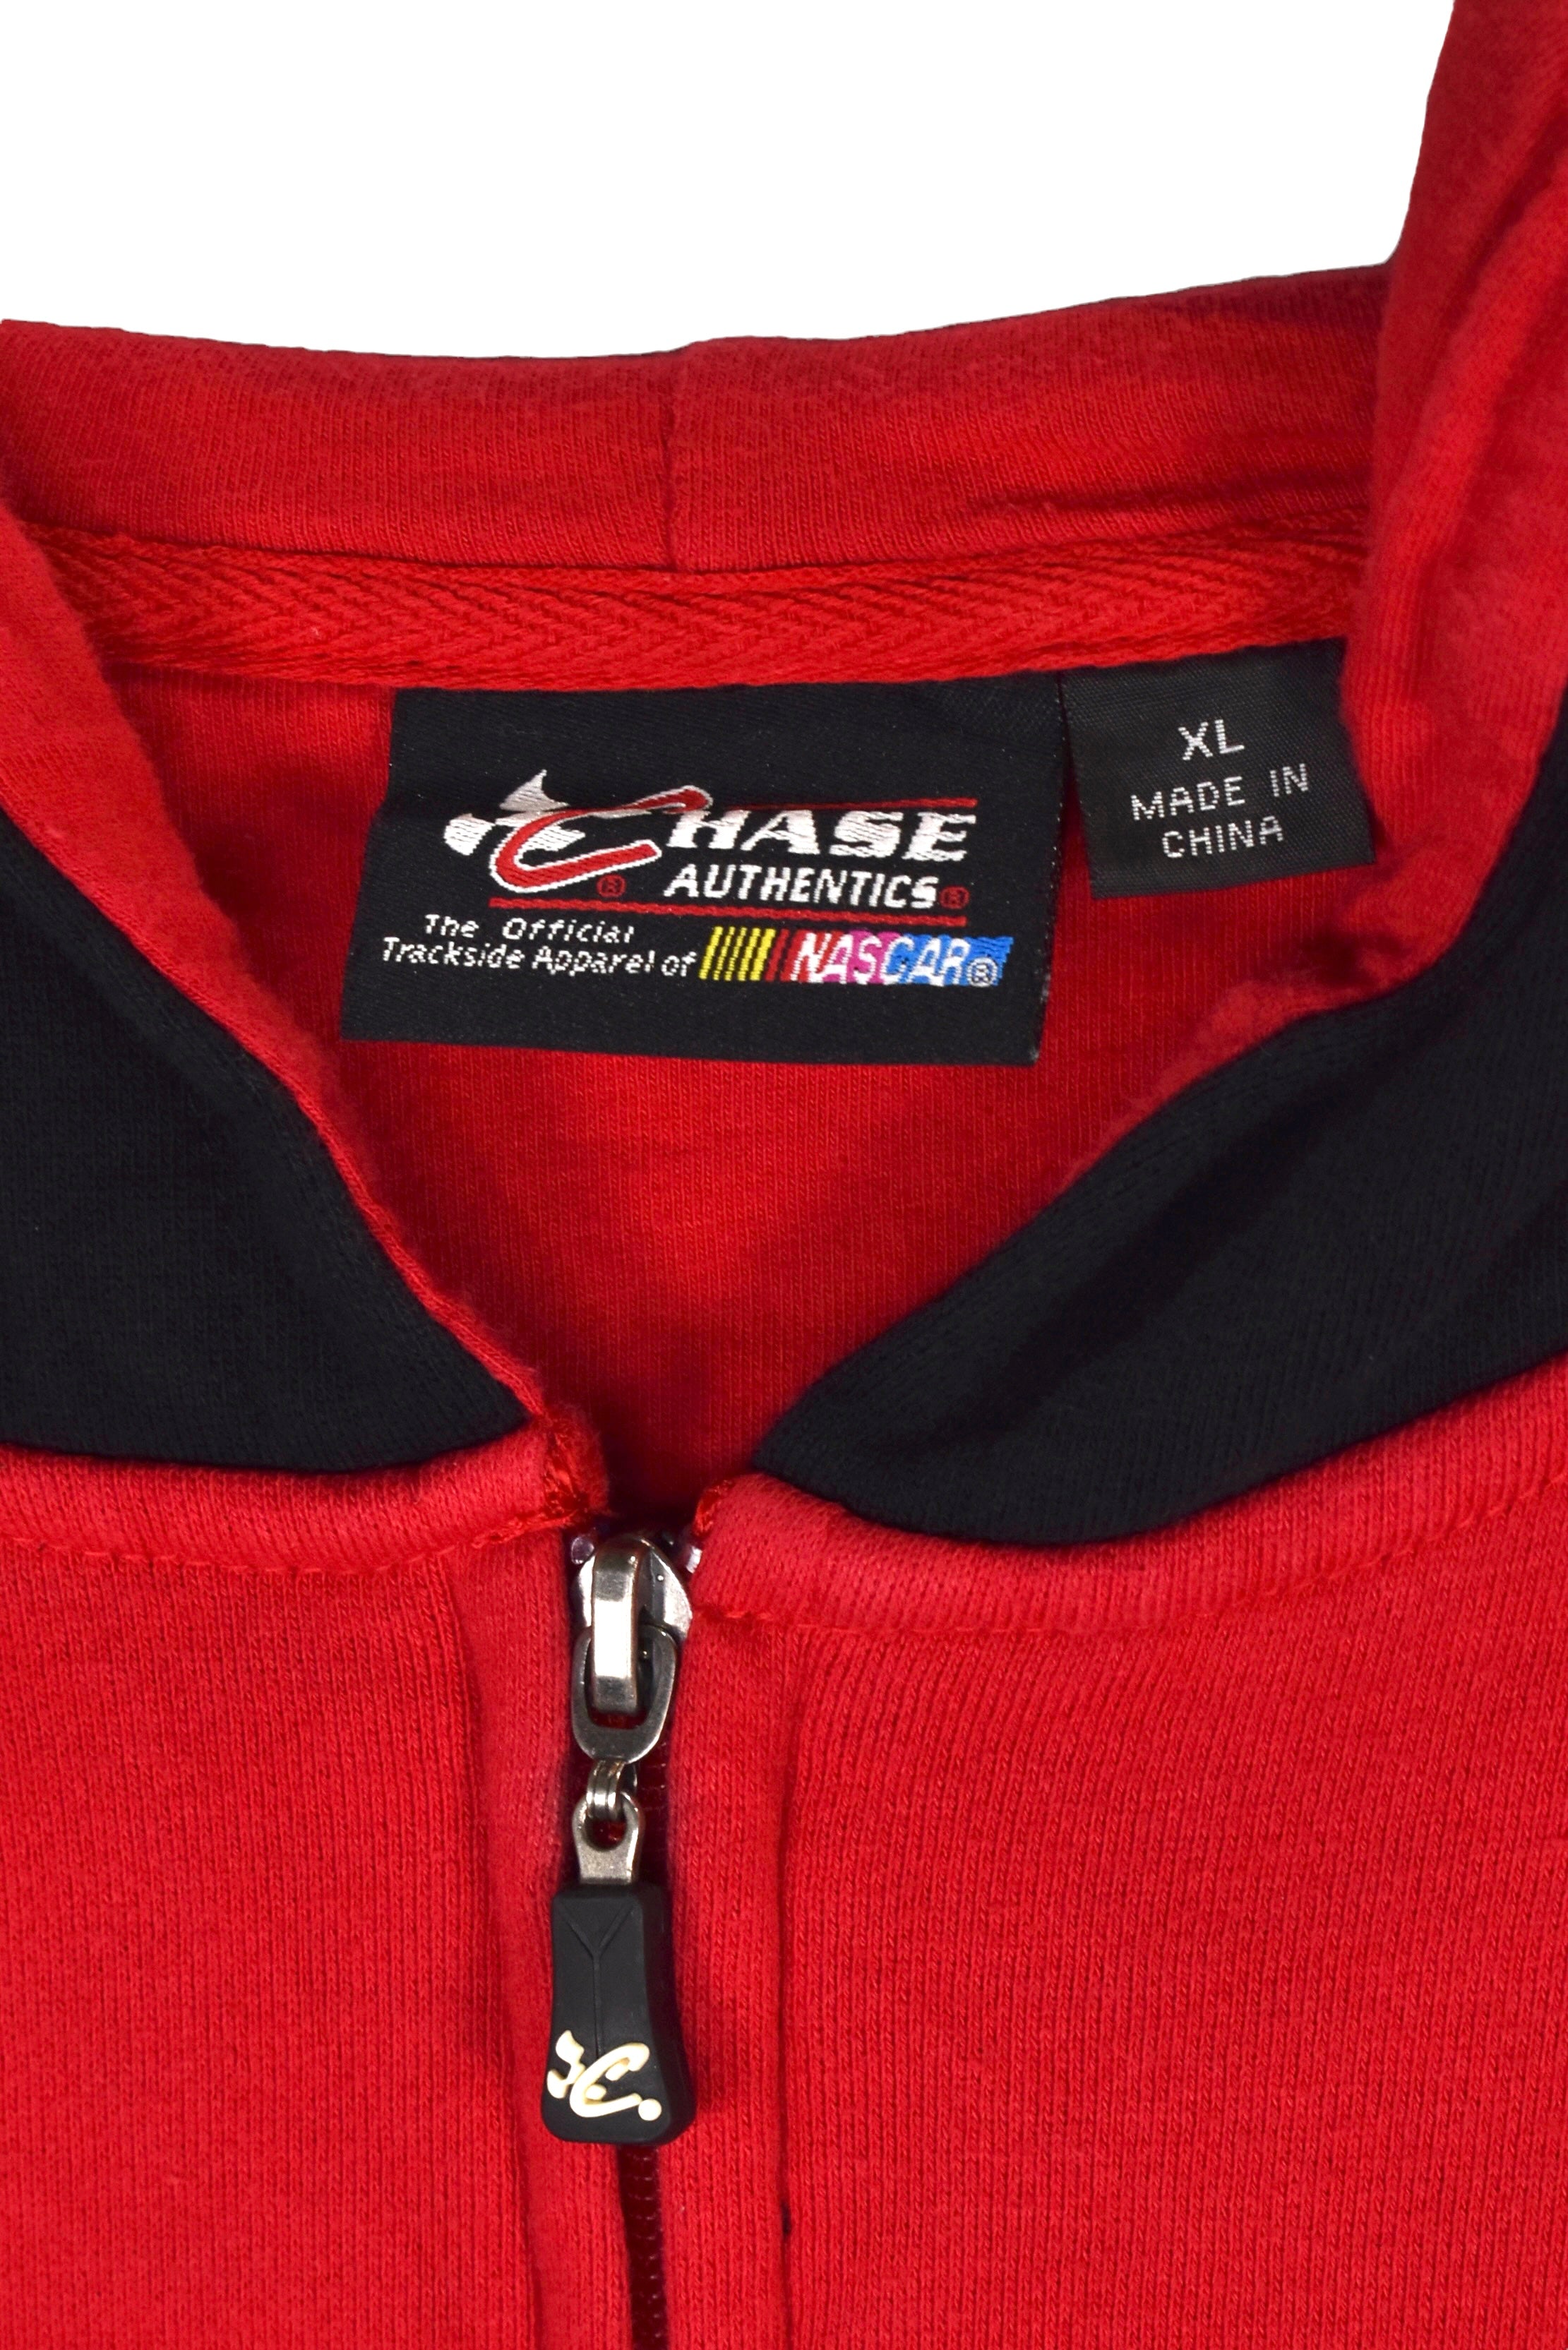 Vintage Nascar jacket (XL), M&M red embroidered sweatshirt